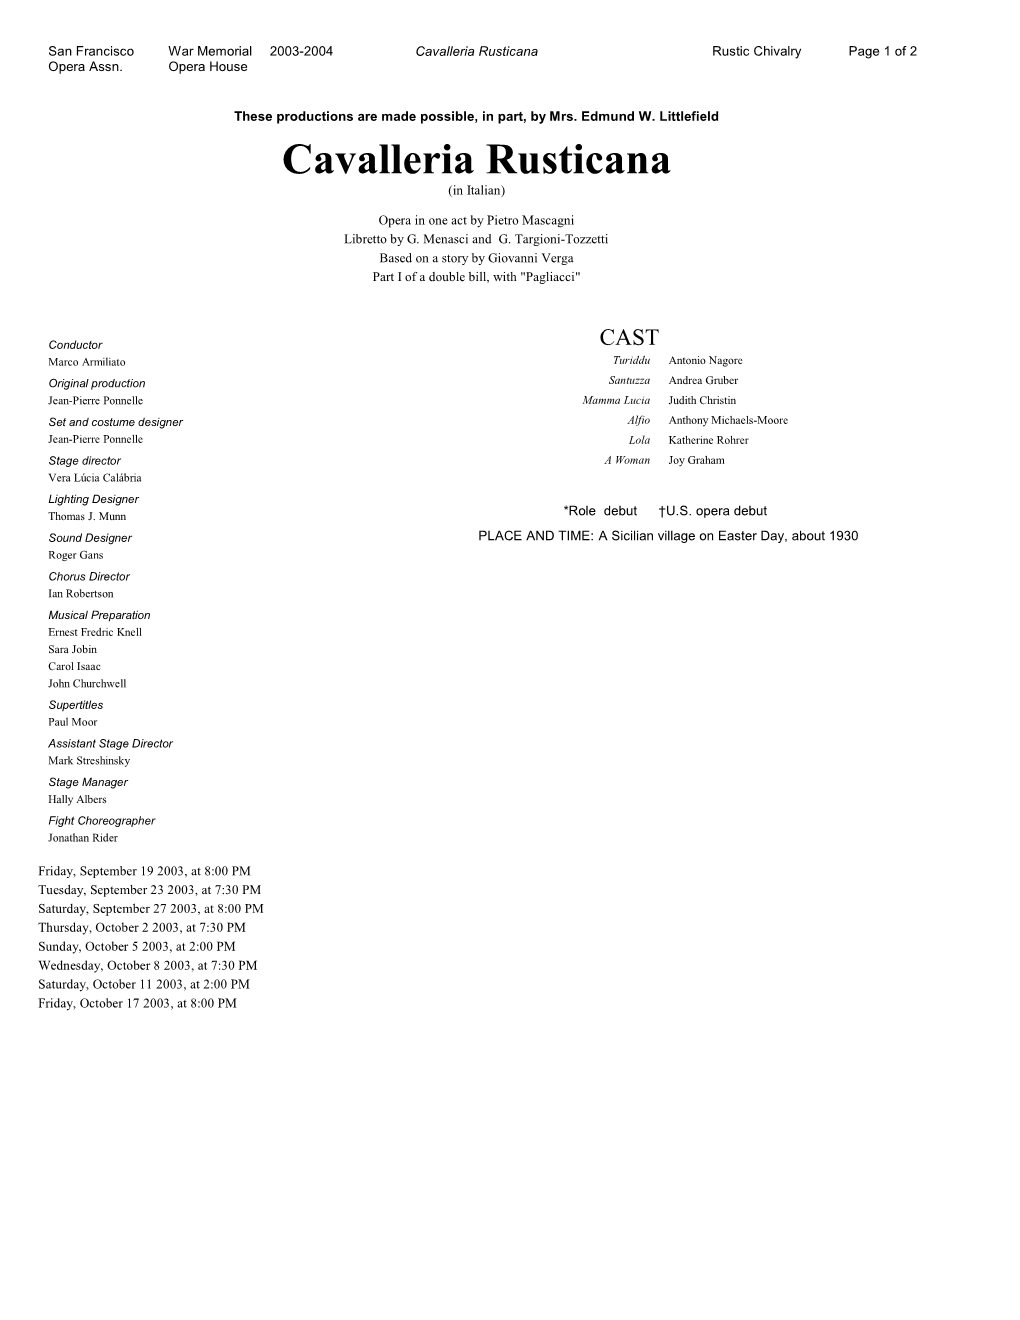 Cavalleria Rusticana Rustic Chivalry Page 1 of 2 Opera Assn